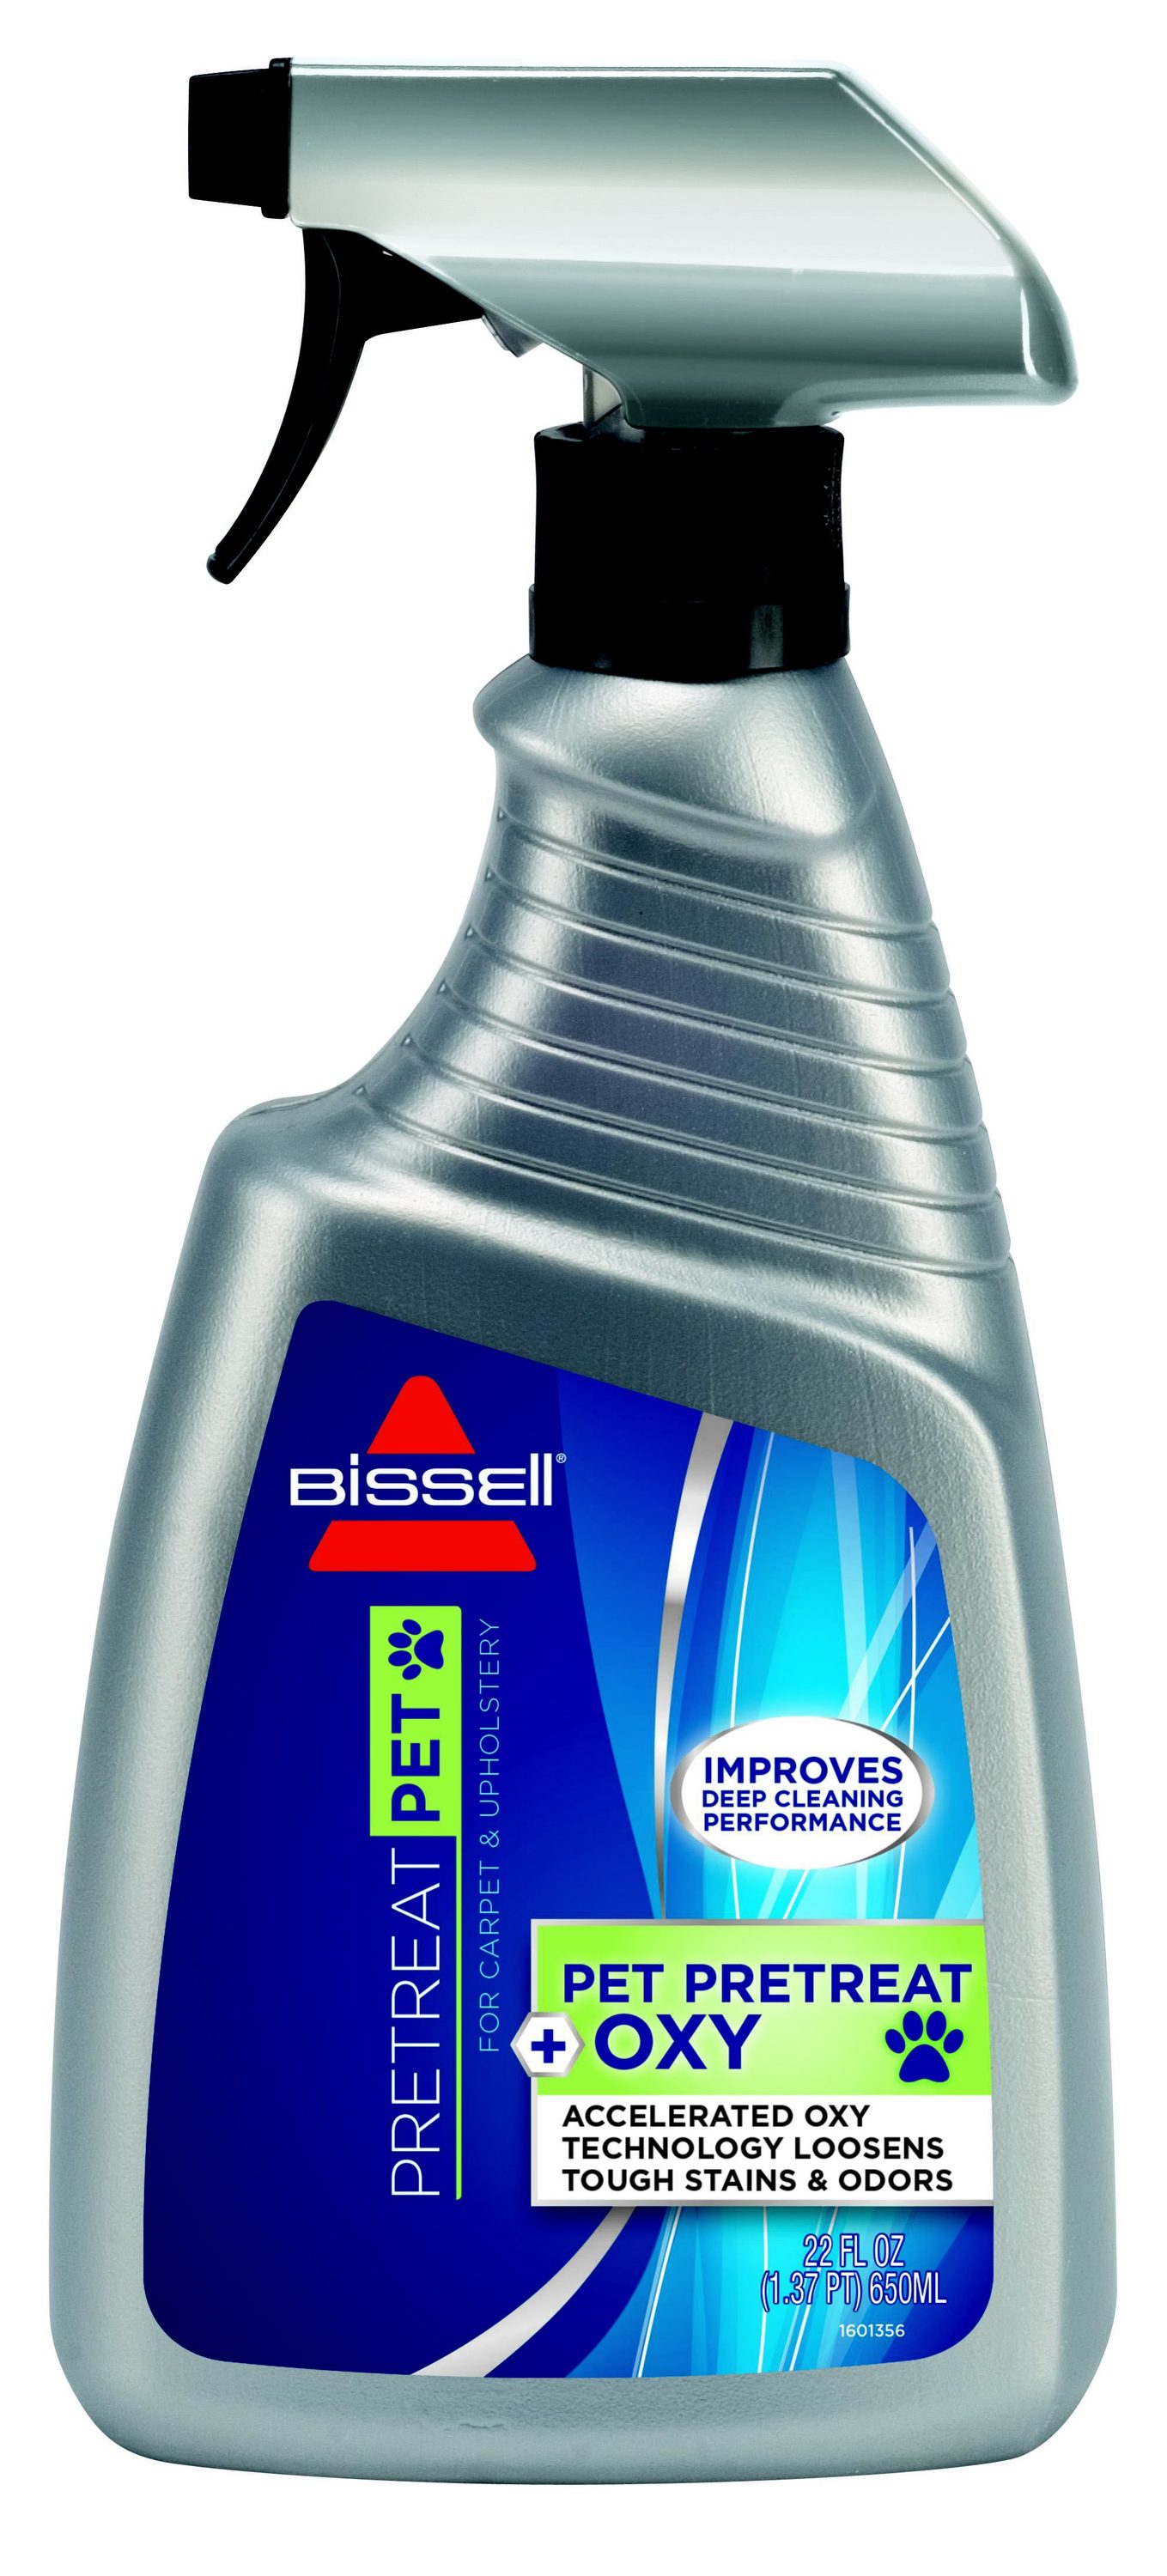 BISSELL Pet Pretreat + Sanitize Liquid 22-oz at